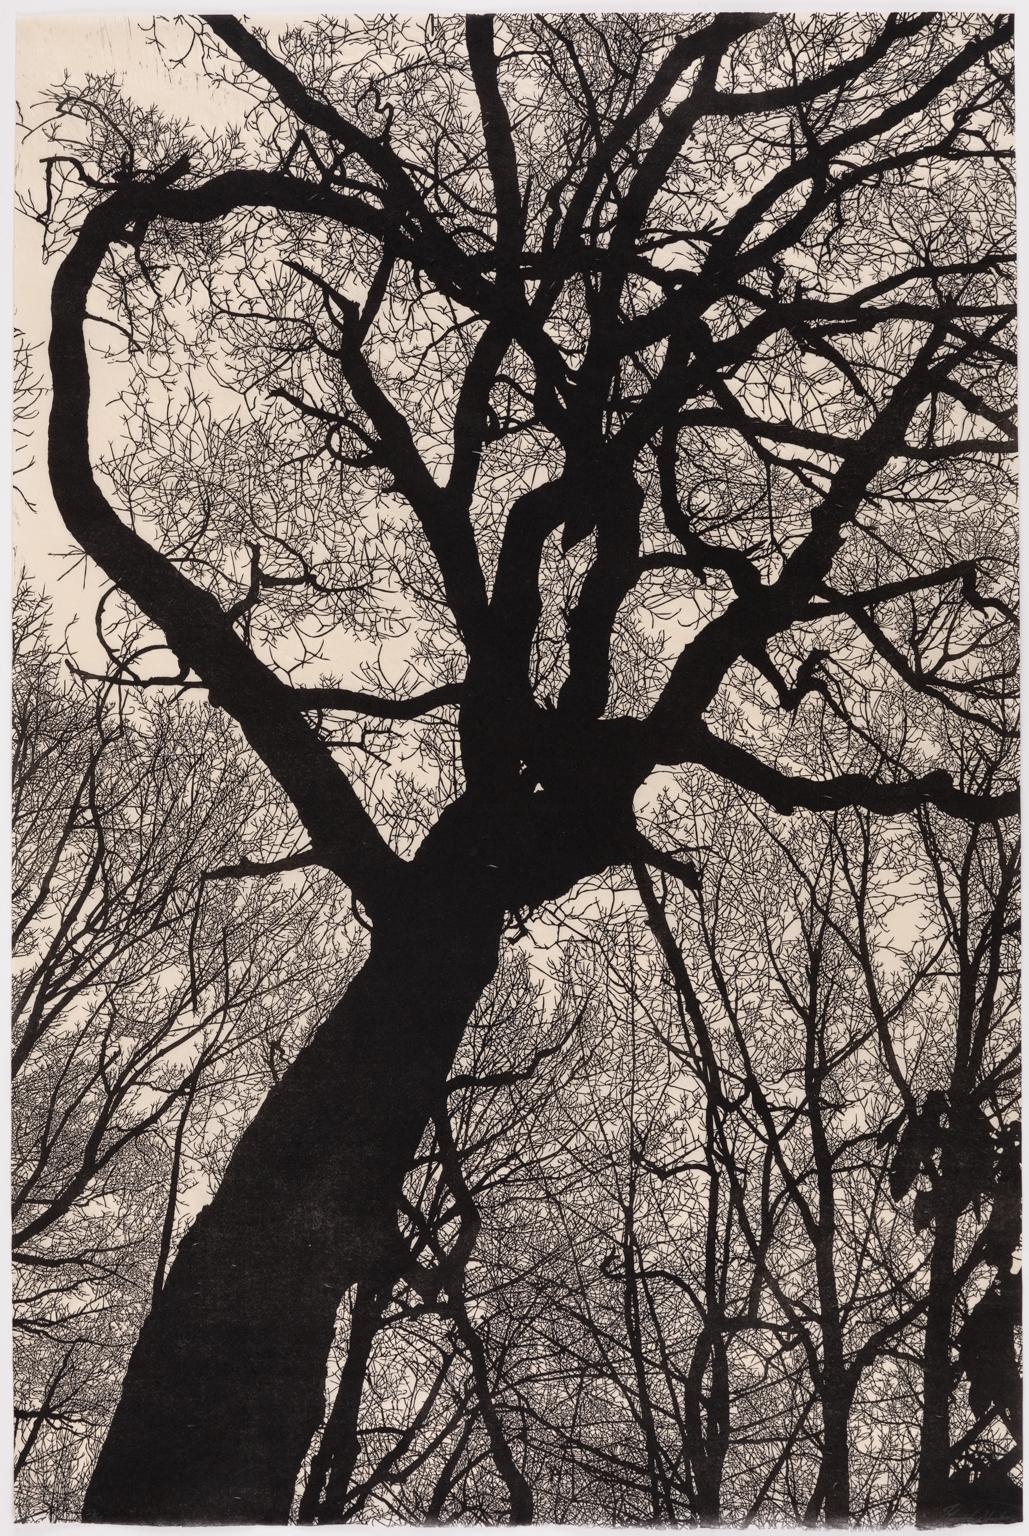 Hannah Skoonberg Landscape Print - Night Descends on Mountain - Framed Linocut Print of a Tree Silhouette